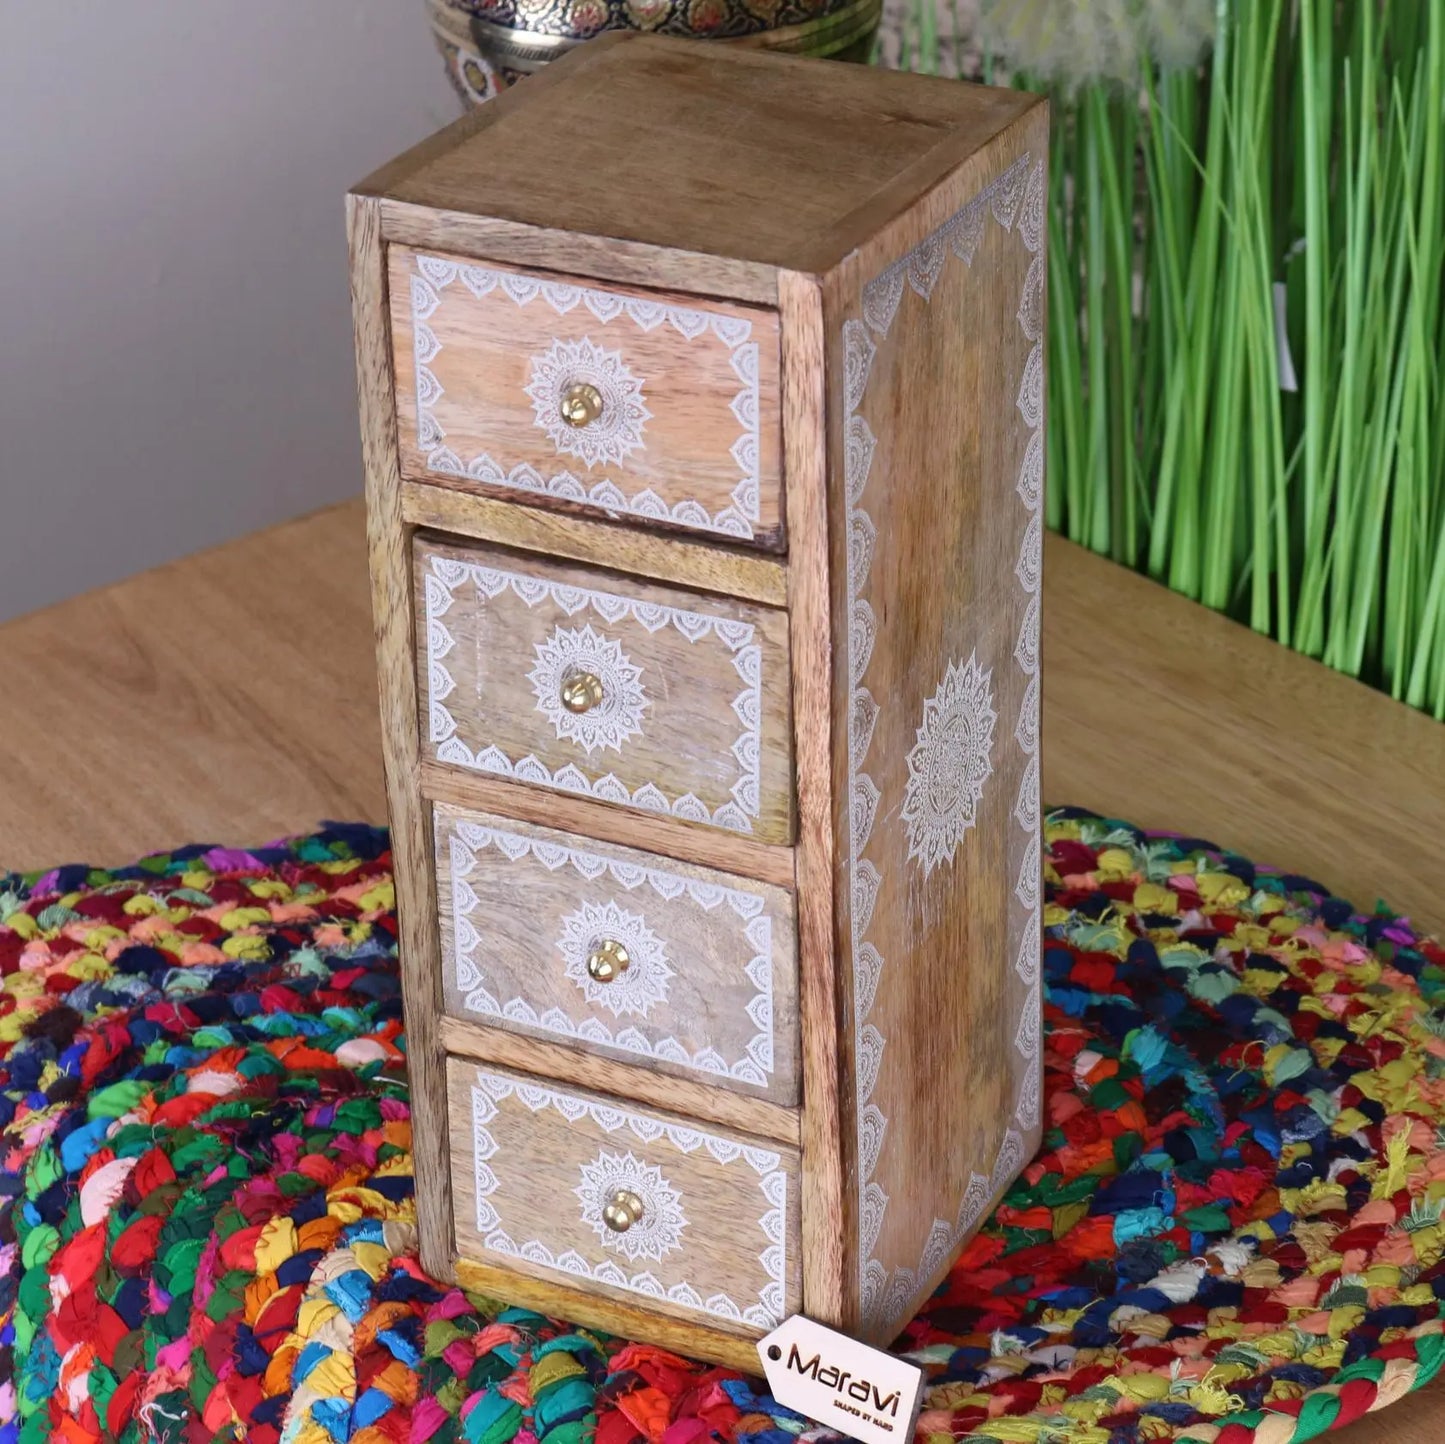 Hijla Mango Wood 4 Mini Drawer Cabinet Mandala Design - Angled Side View